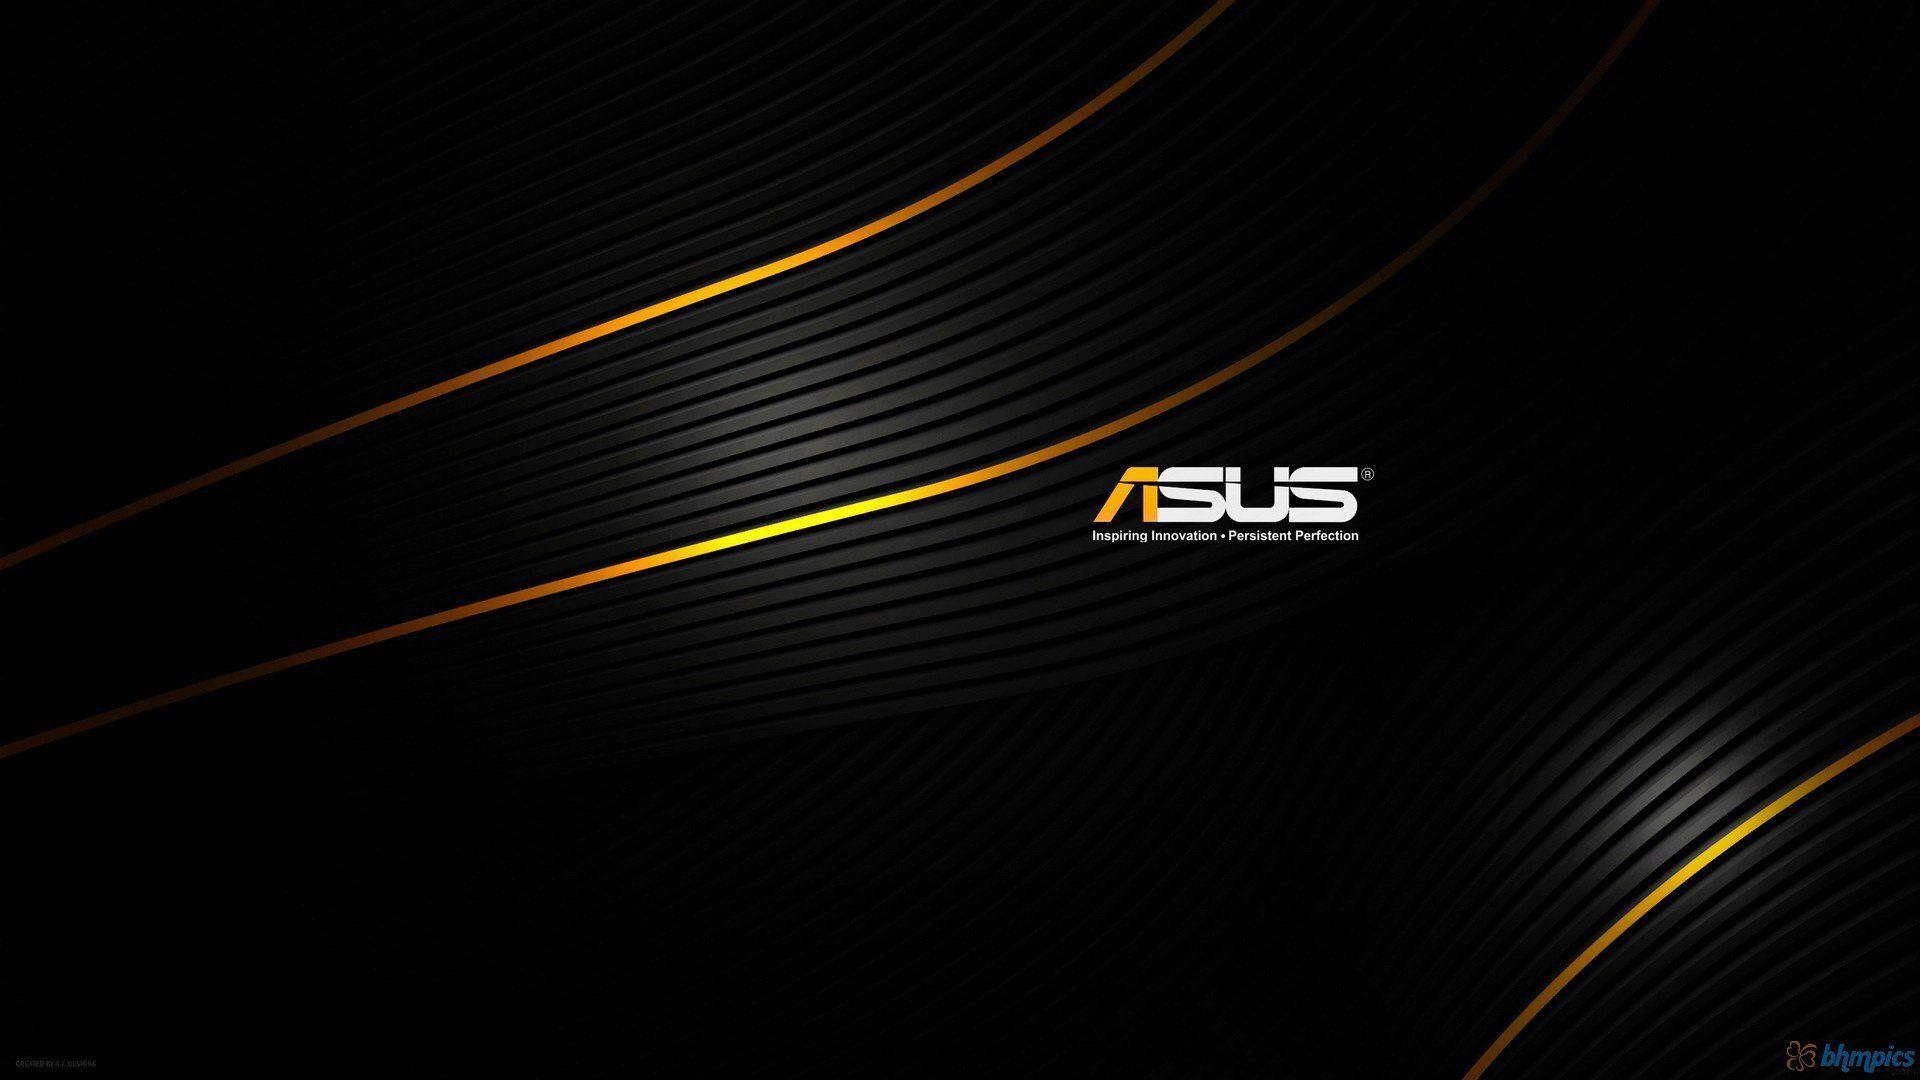 Asus Logo - ASUS Logo Wallpaper